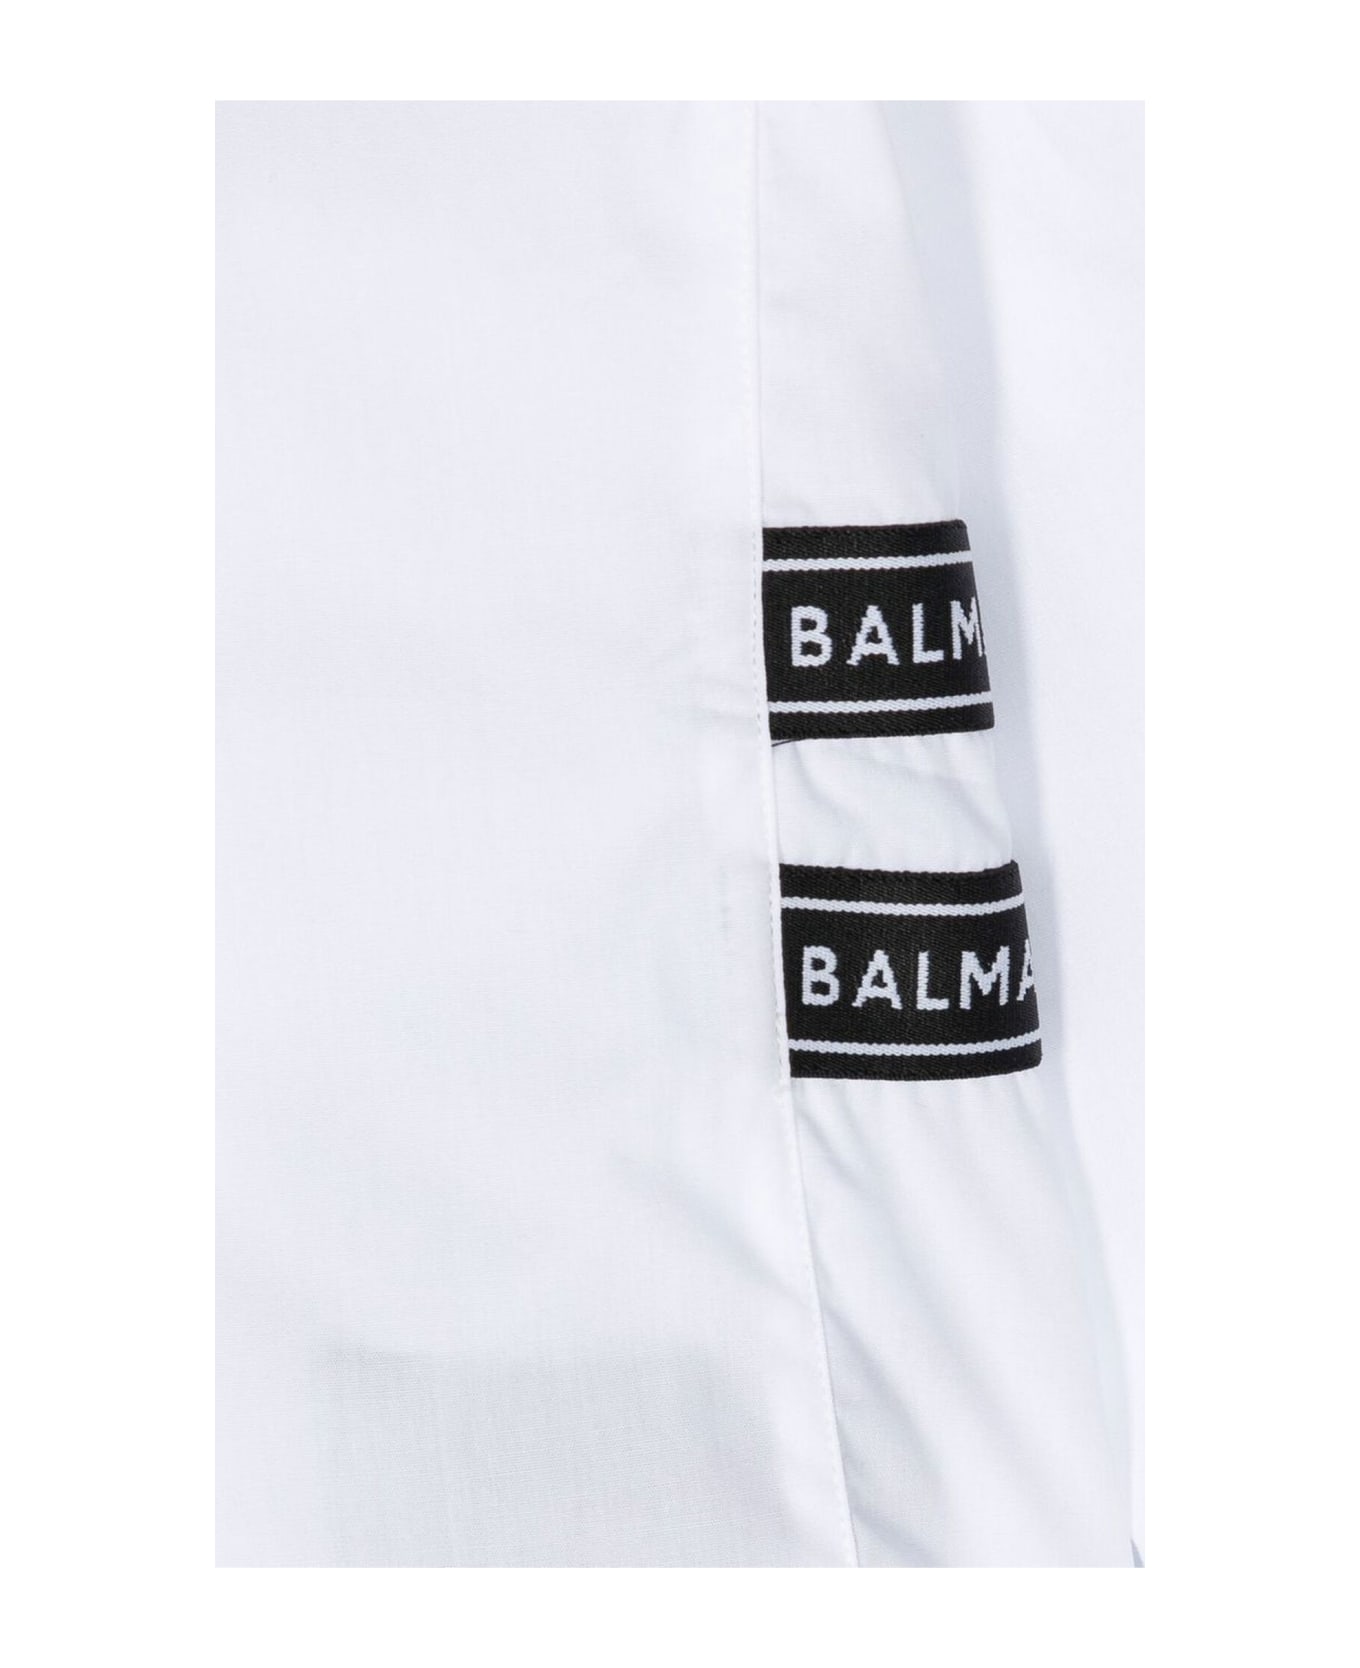 Balmain White Cotton Shirt - Bianco